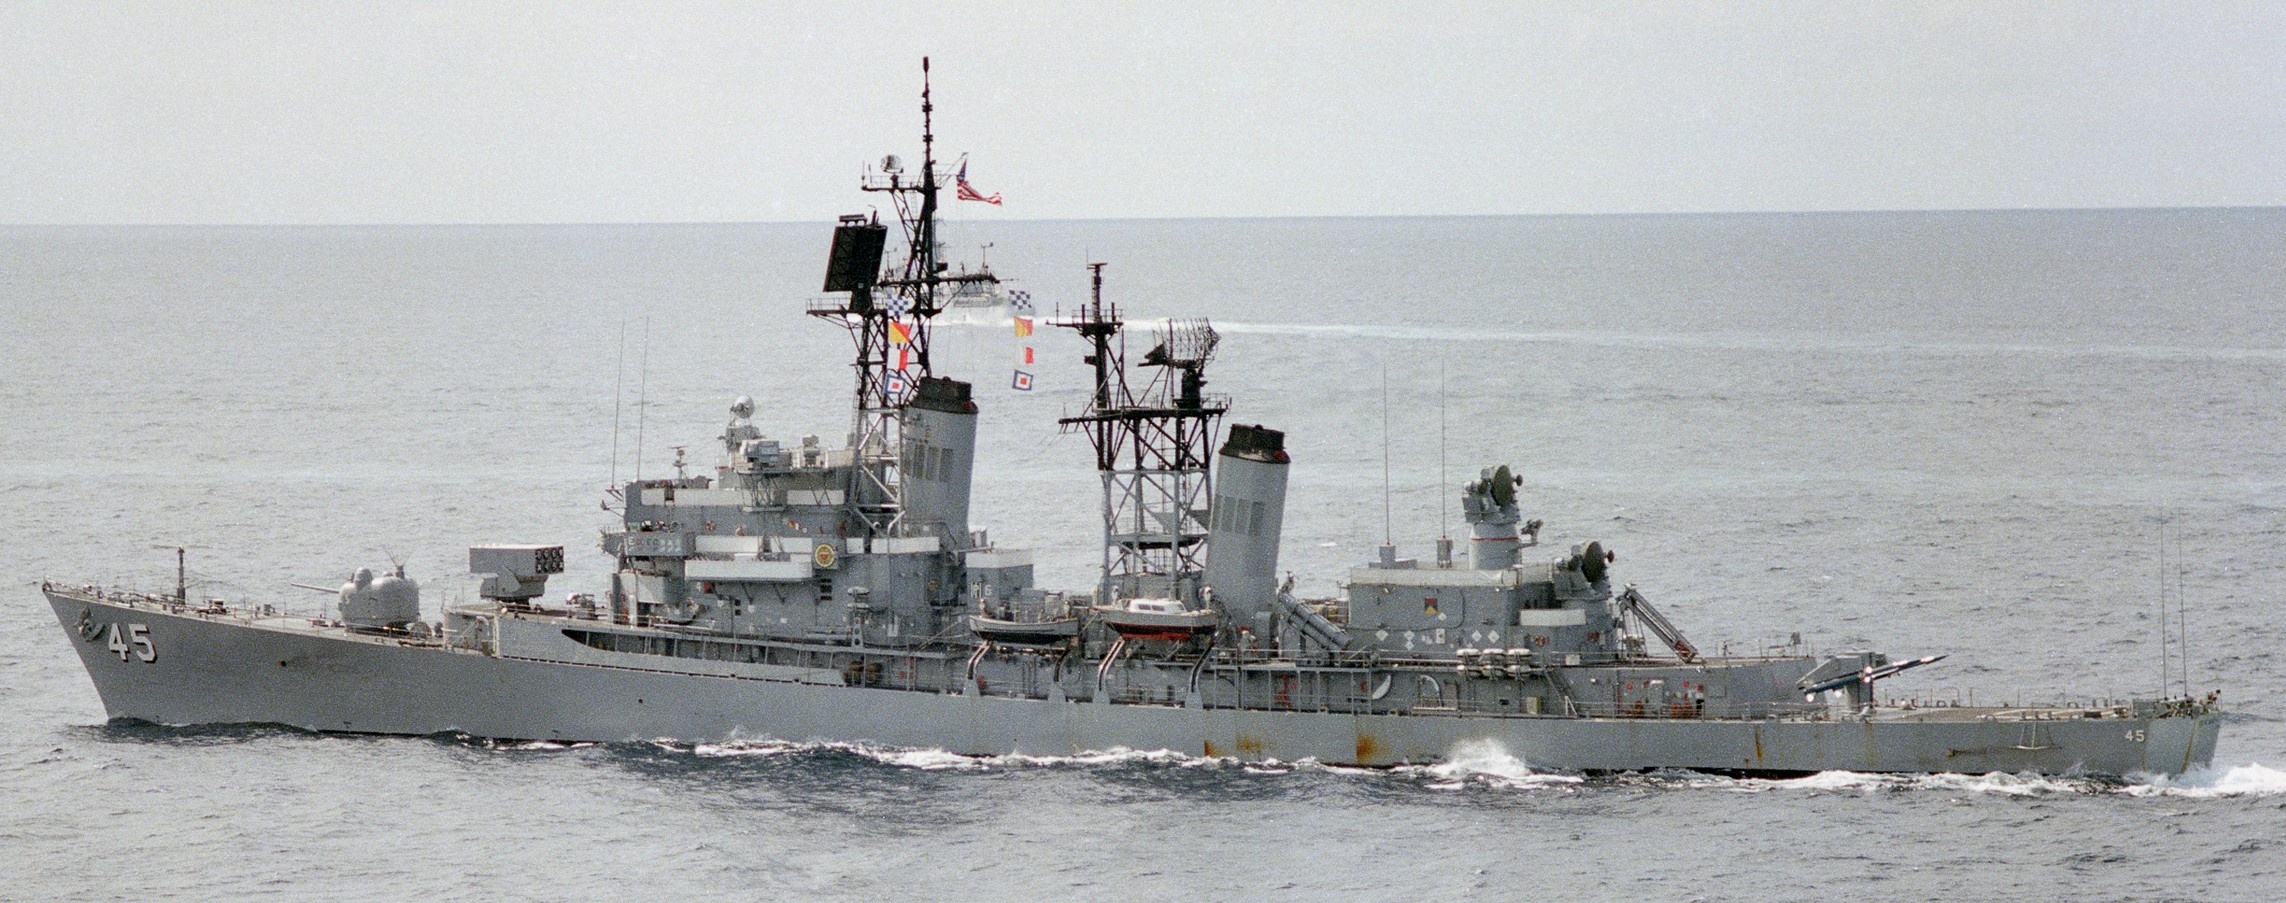 ddg-45 uss dewey farragut class destroyer us navy 1988 11